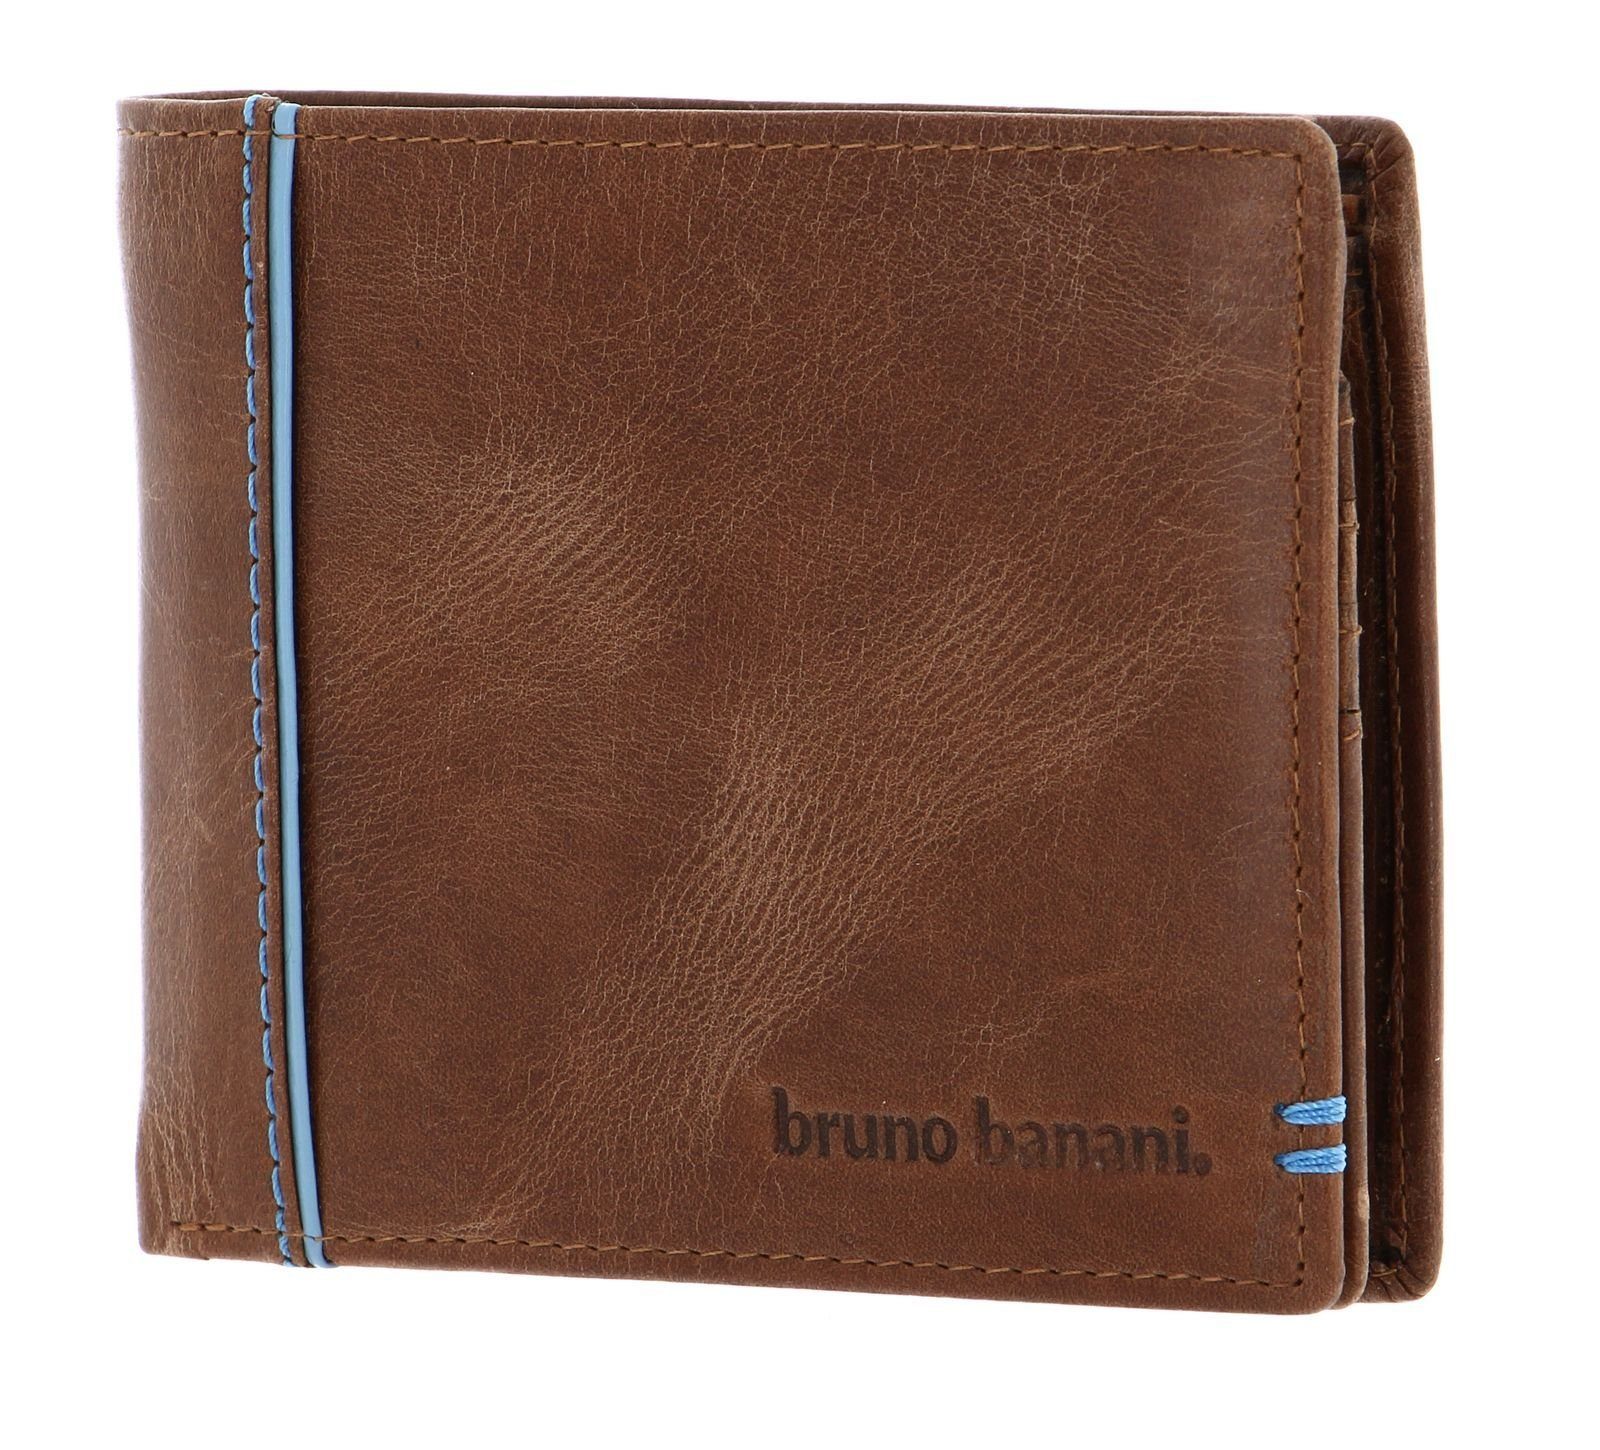 Bruno Banani Geldbörse / Blue Cognac